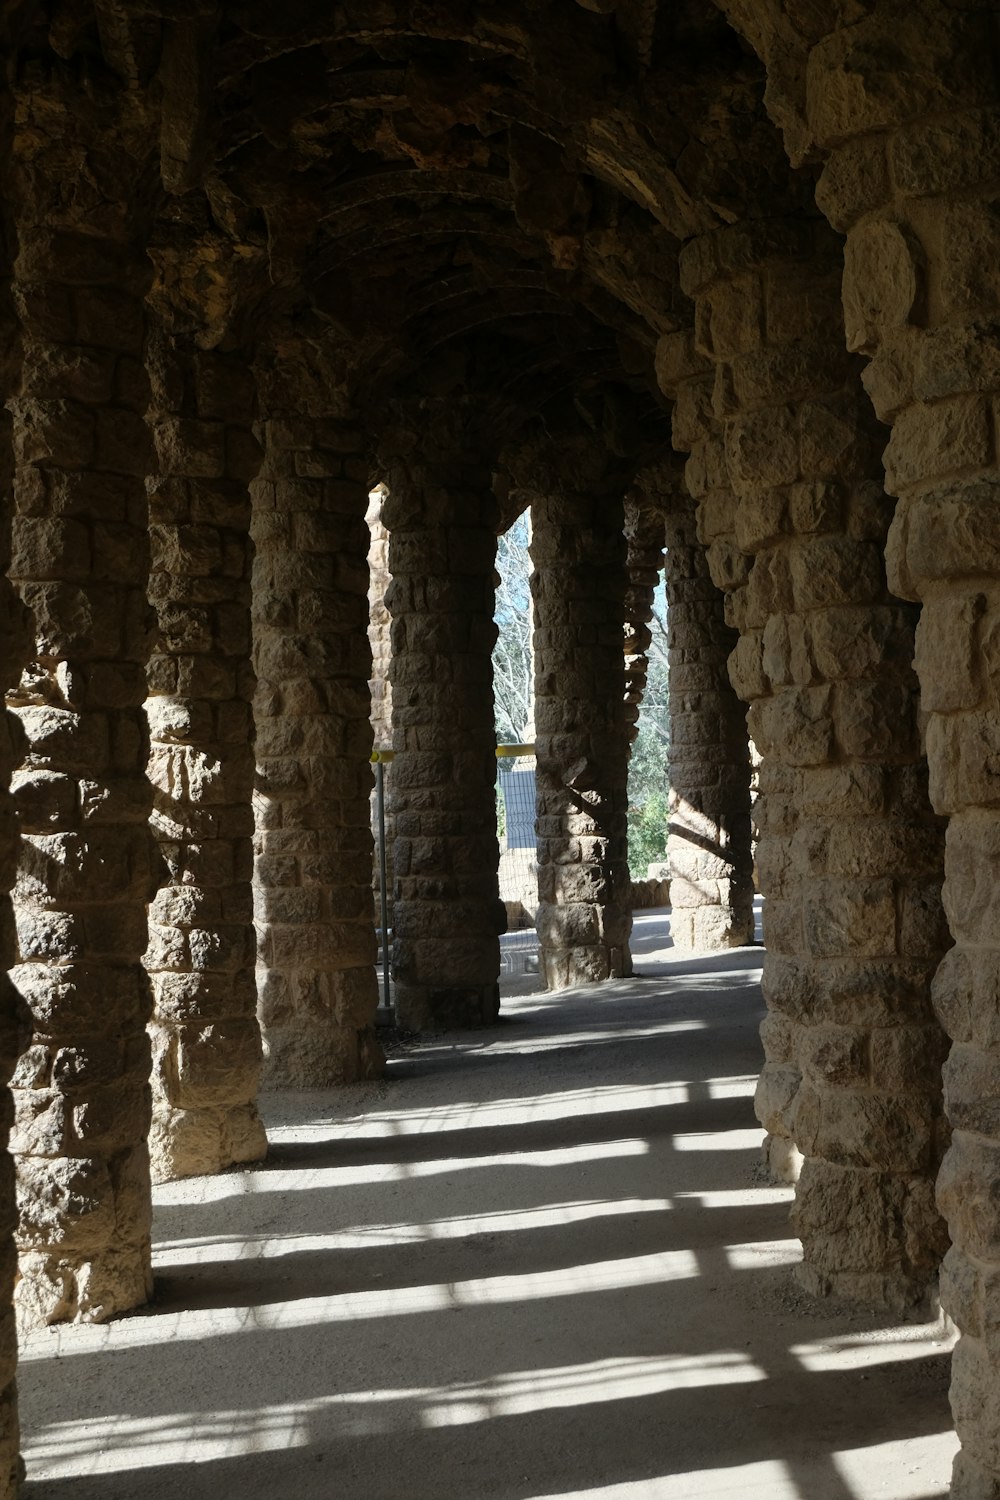 a row of stone pillars on a walkway